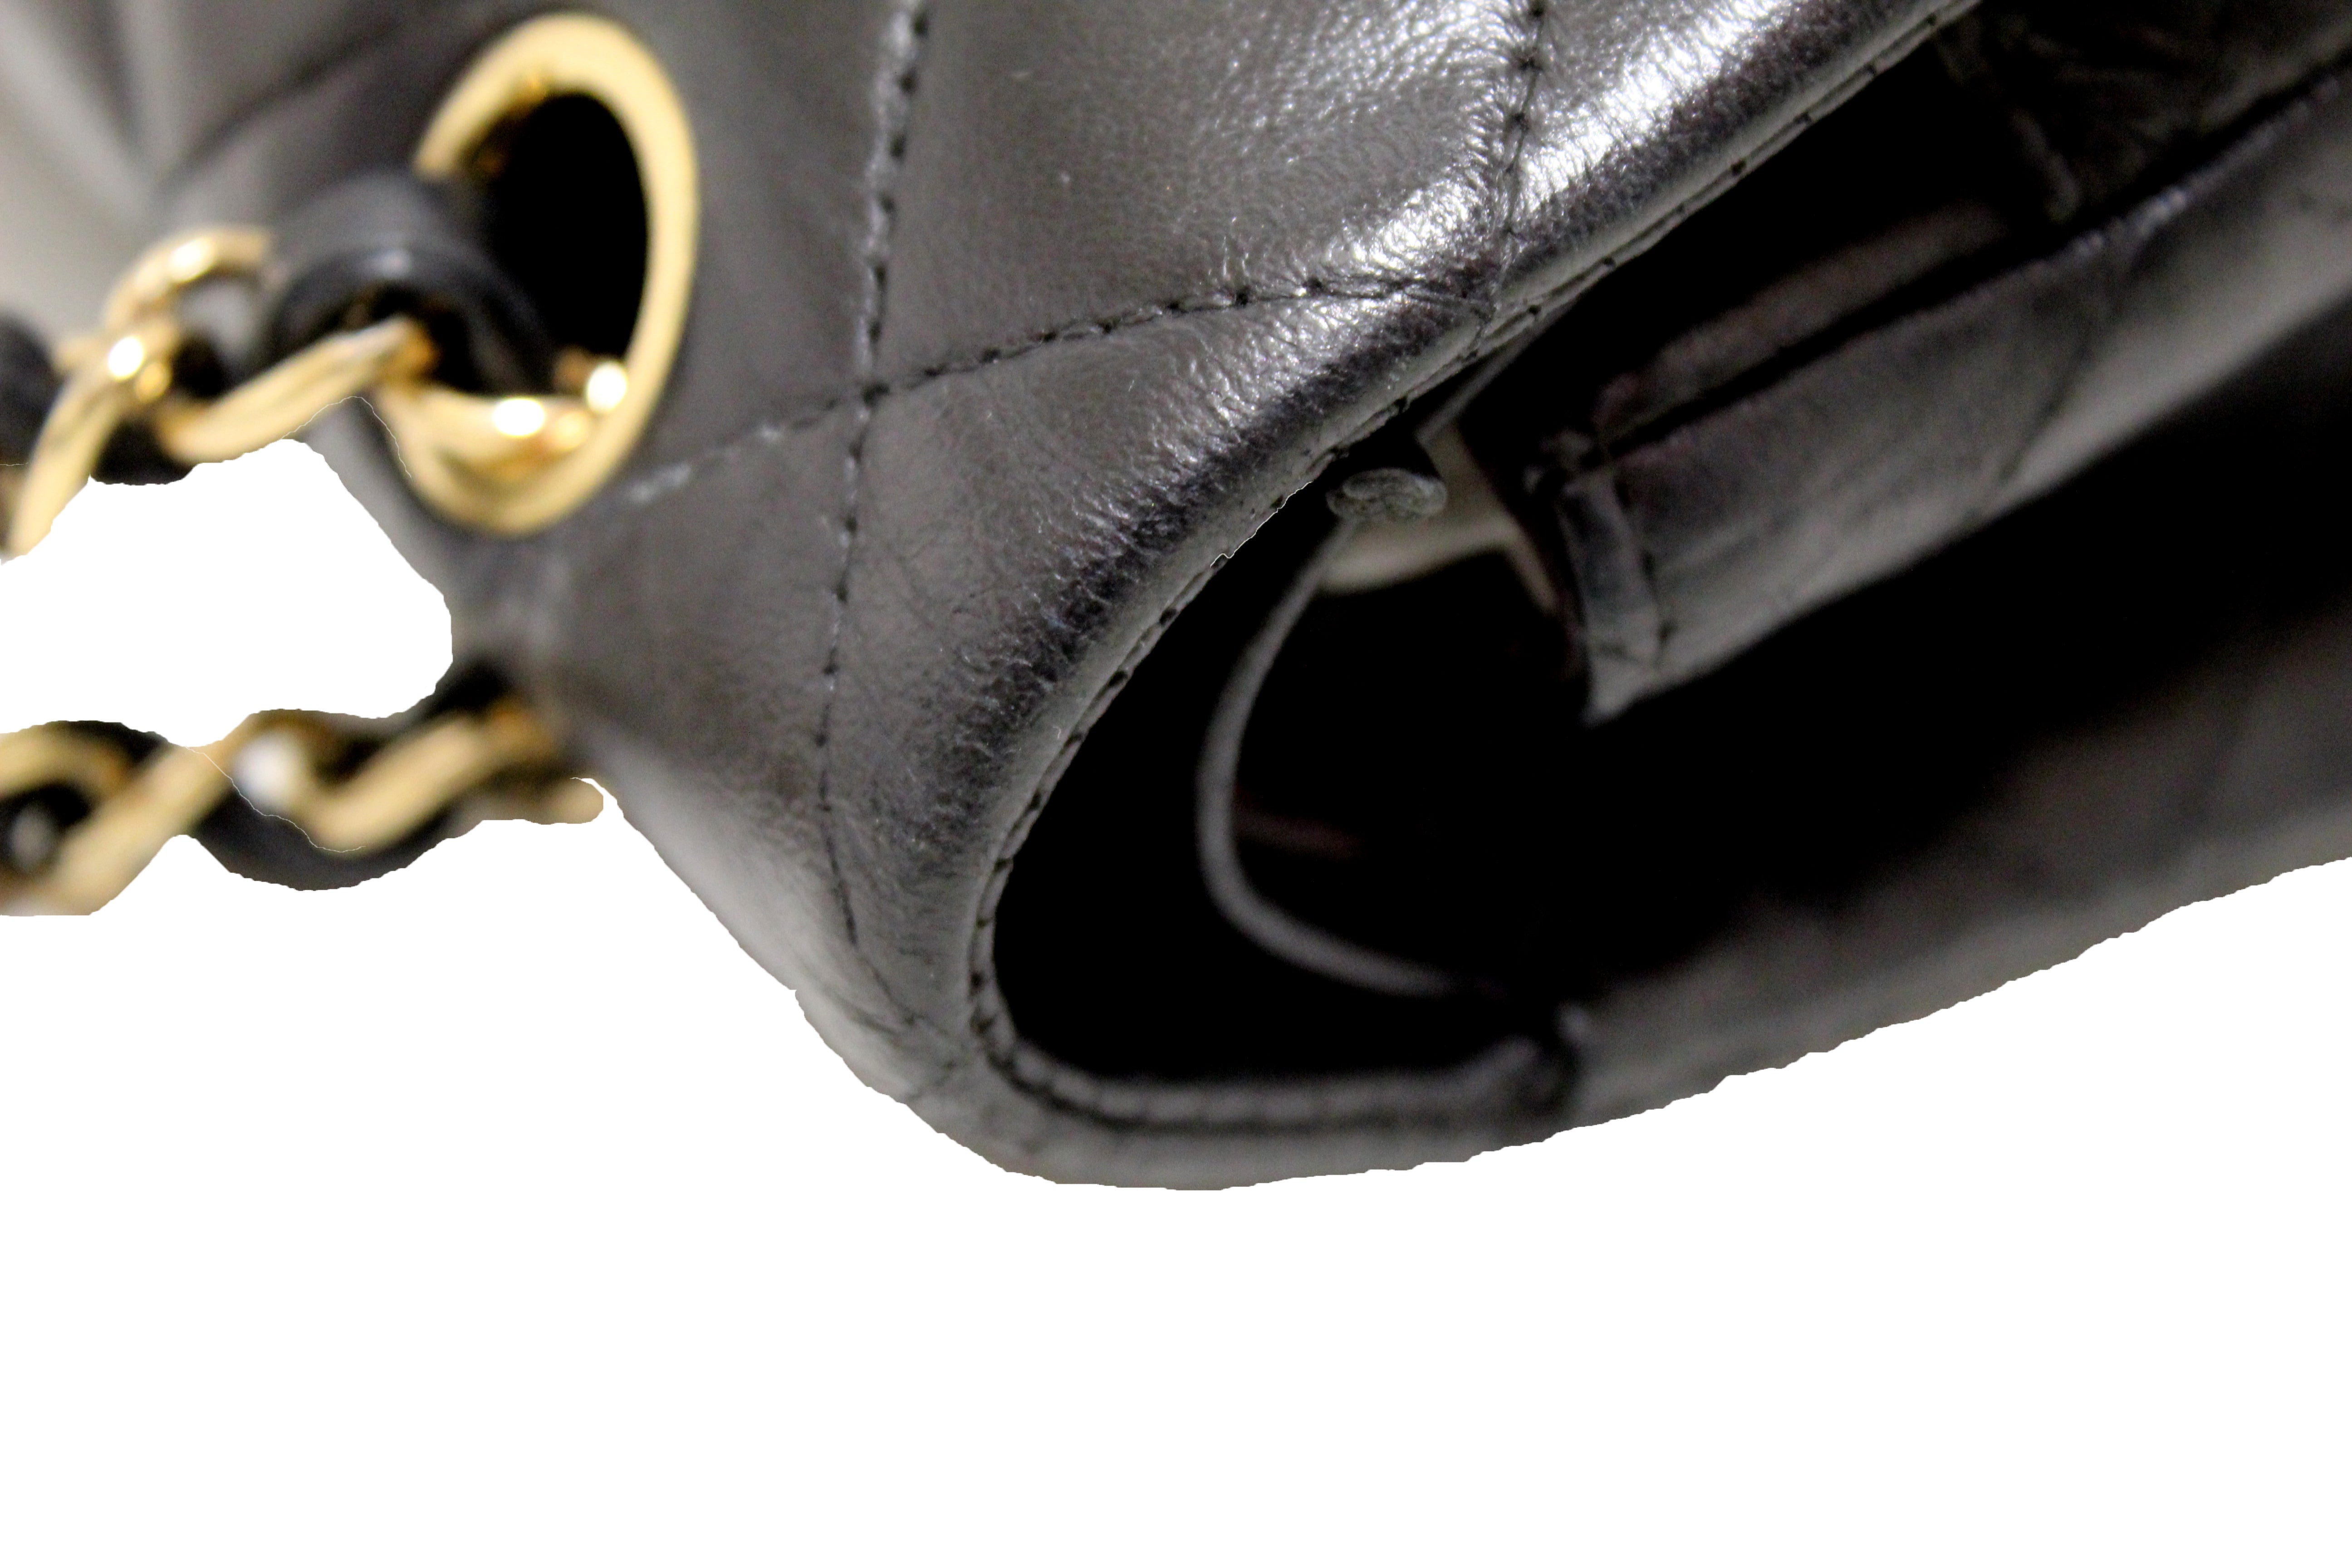 Authentic Chanel Black Vintage Classic Small Double Flap Bag